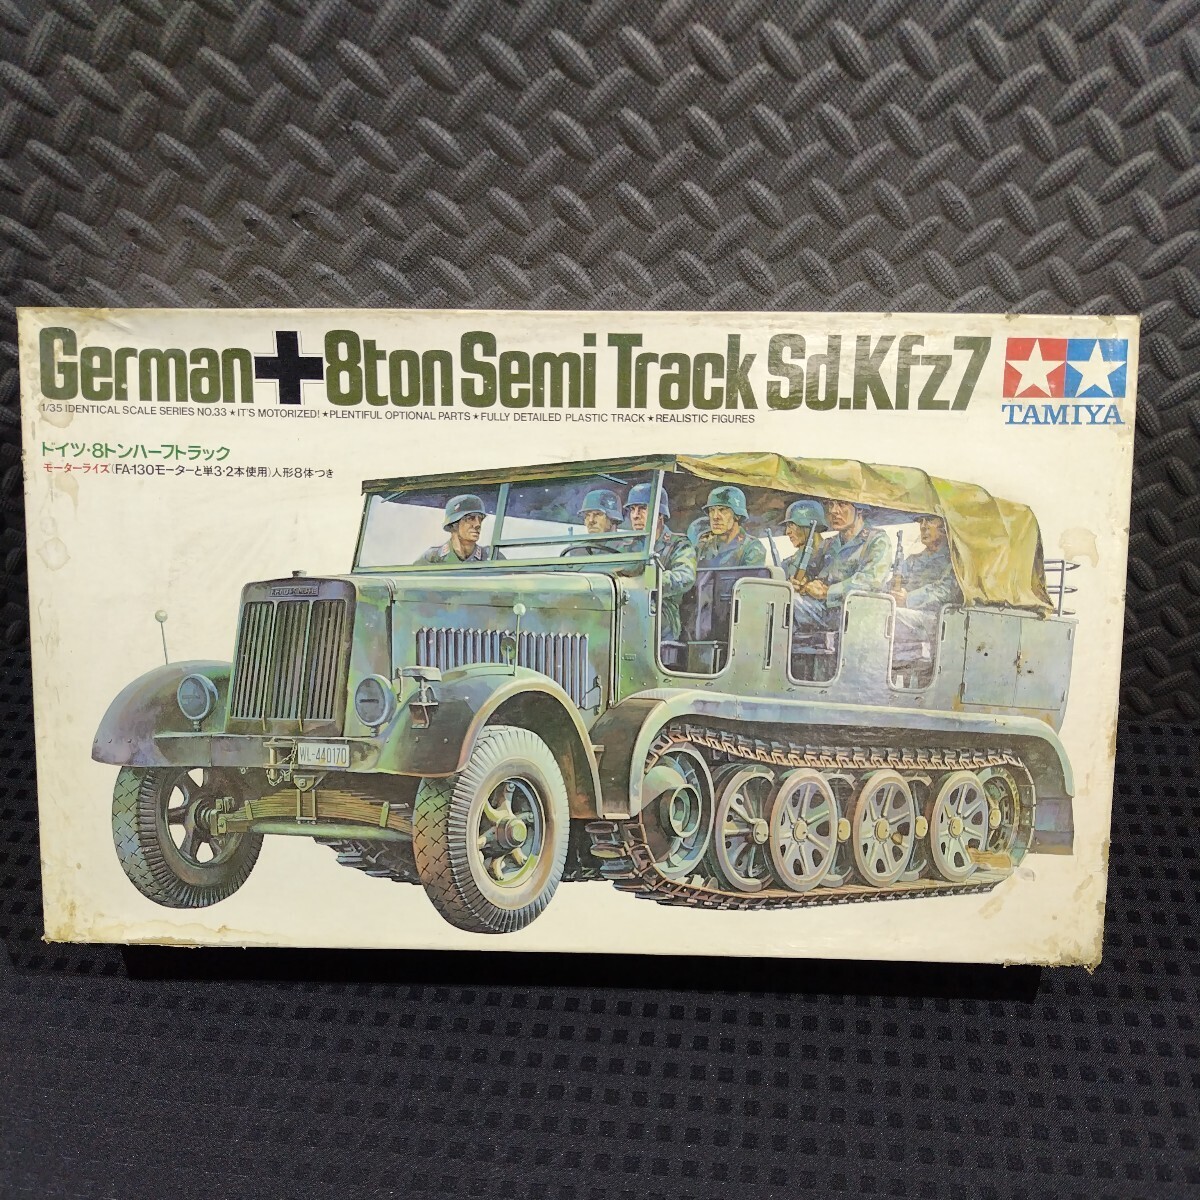  Tamiya 1/35 motor laiz Germany 8 ton half truck GERMAN 8TON SEMI TRACK Sd.Kfz7 small deer TAMIYA